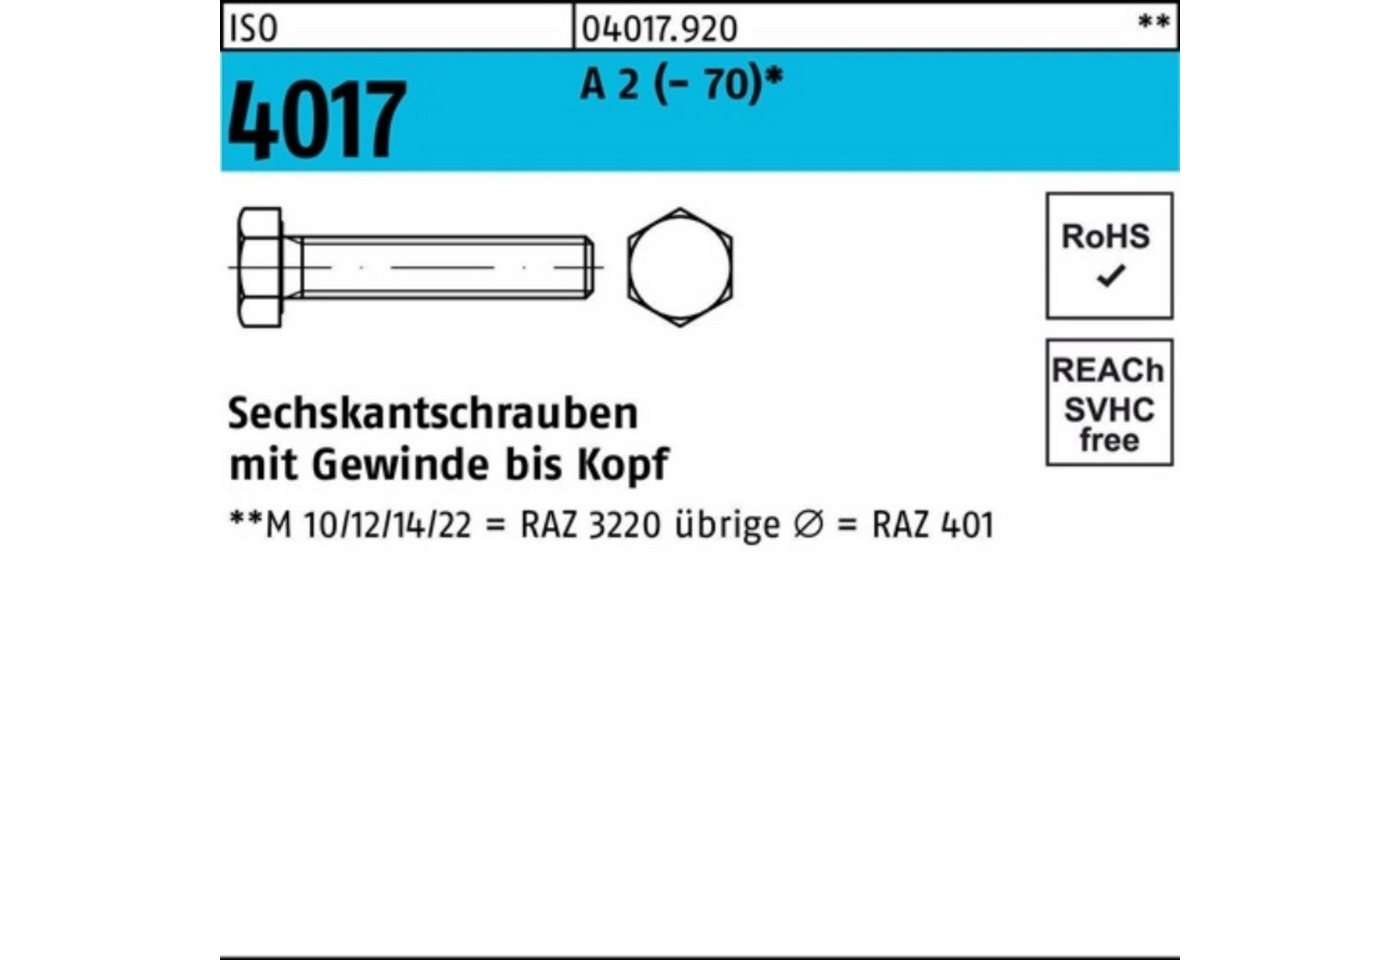 Bufab Sechskantschraube 100er Pack Sechskantschraube ISO 4017 VG M10x 80 A 2 (70) 50 Stück von Bufab